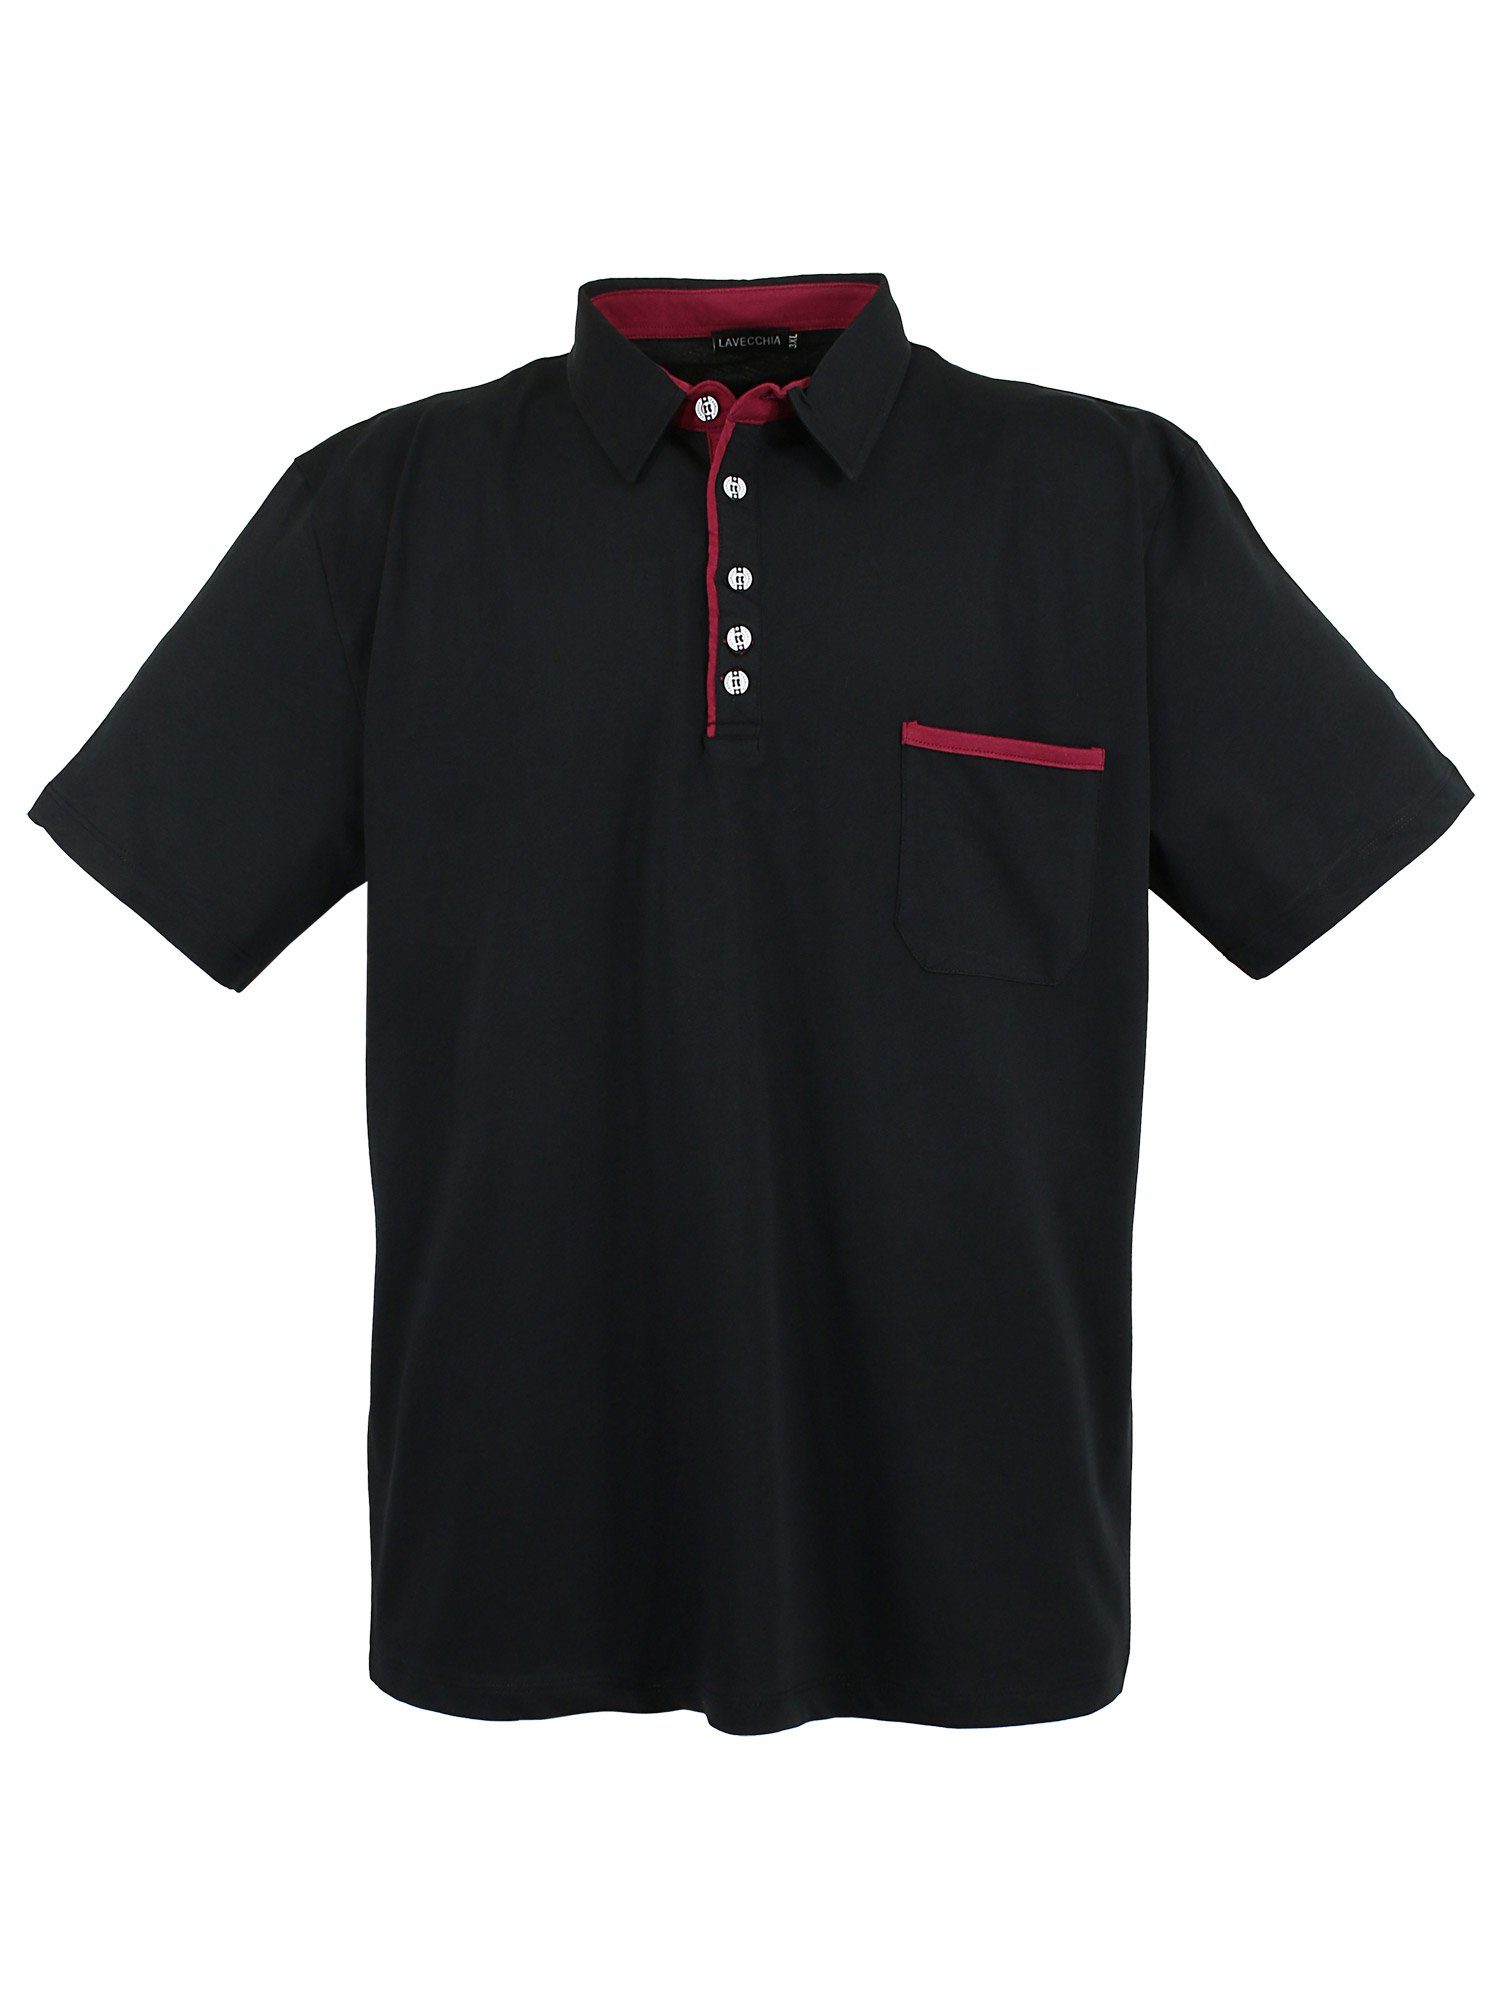 Shirt Polo Poloshirt Herren Polo schwarz Lavecchia Shirt LV-1701 Herren Übergrößen